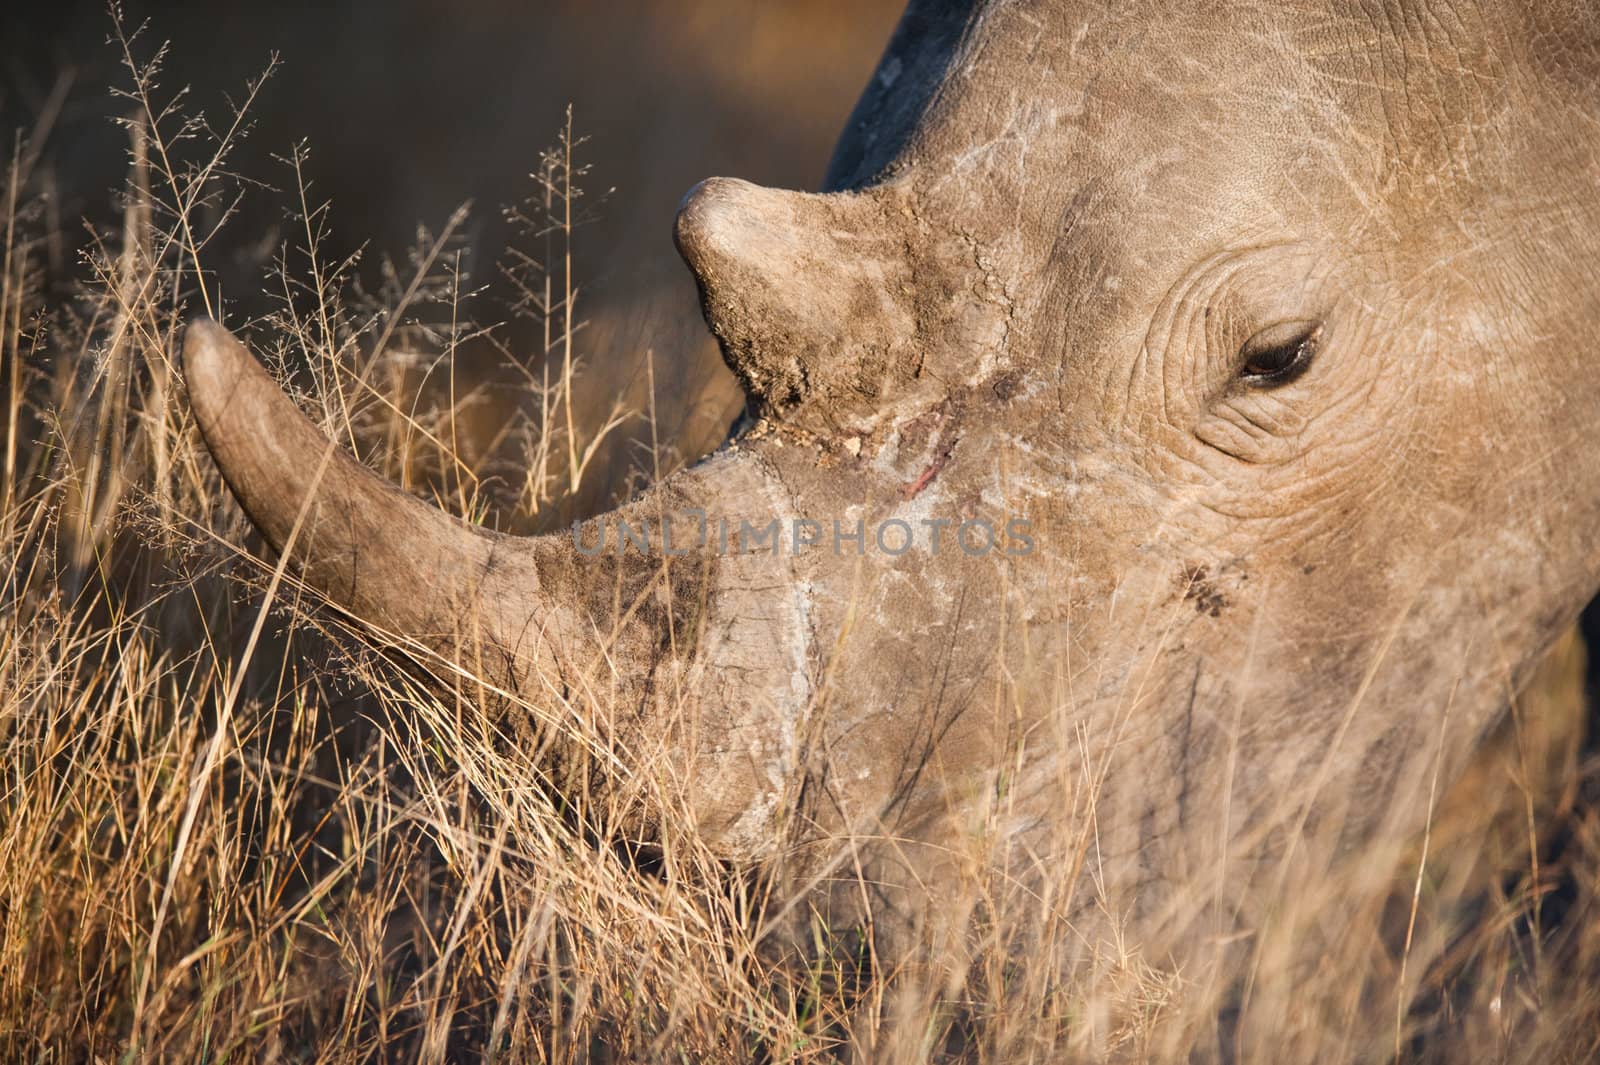 Grazing rhino up close by edan